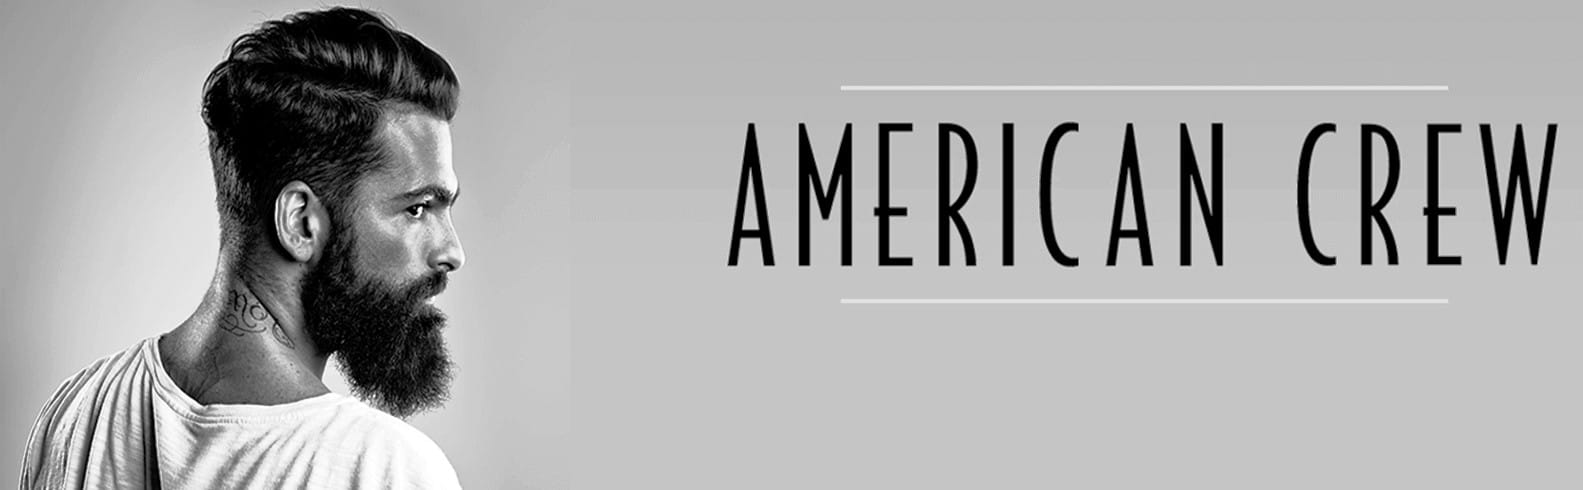 America Crew Banner